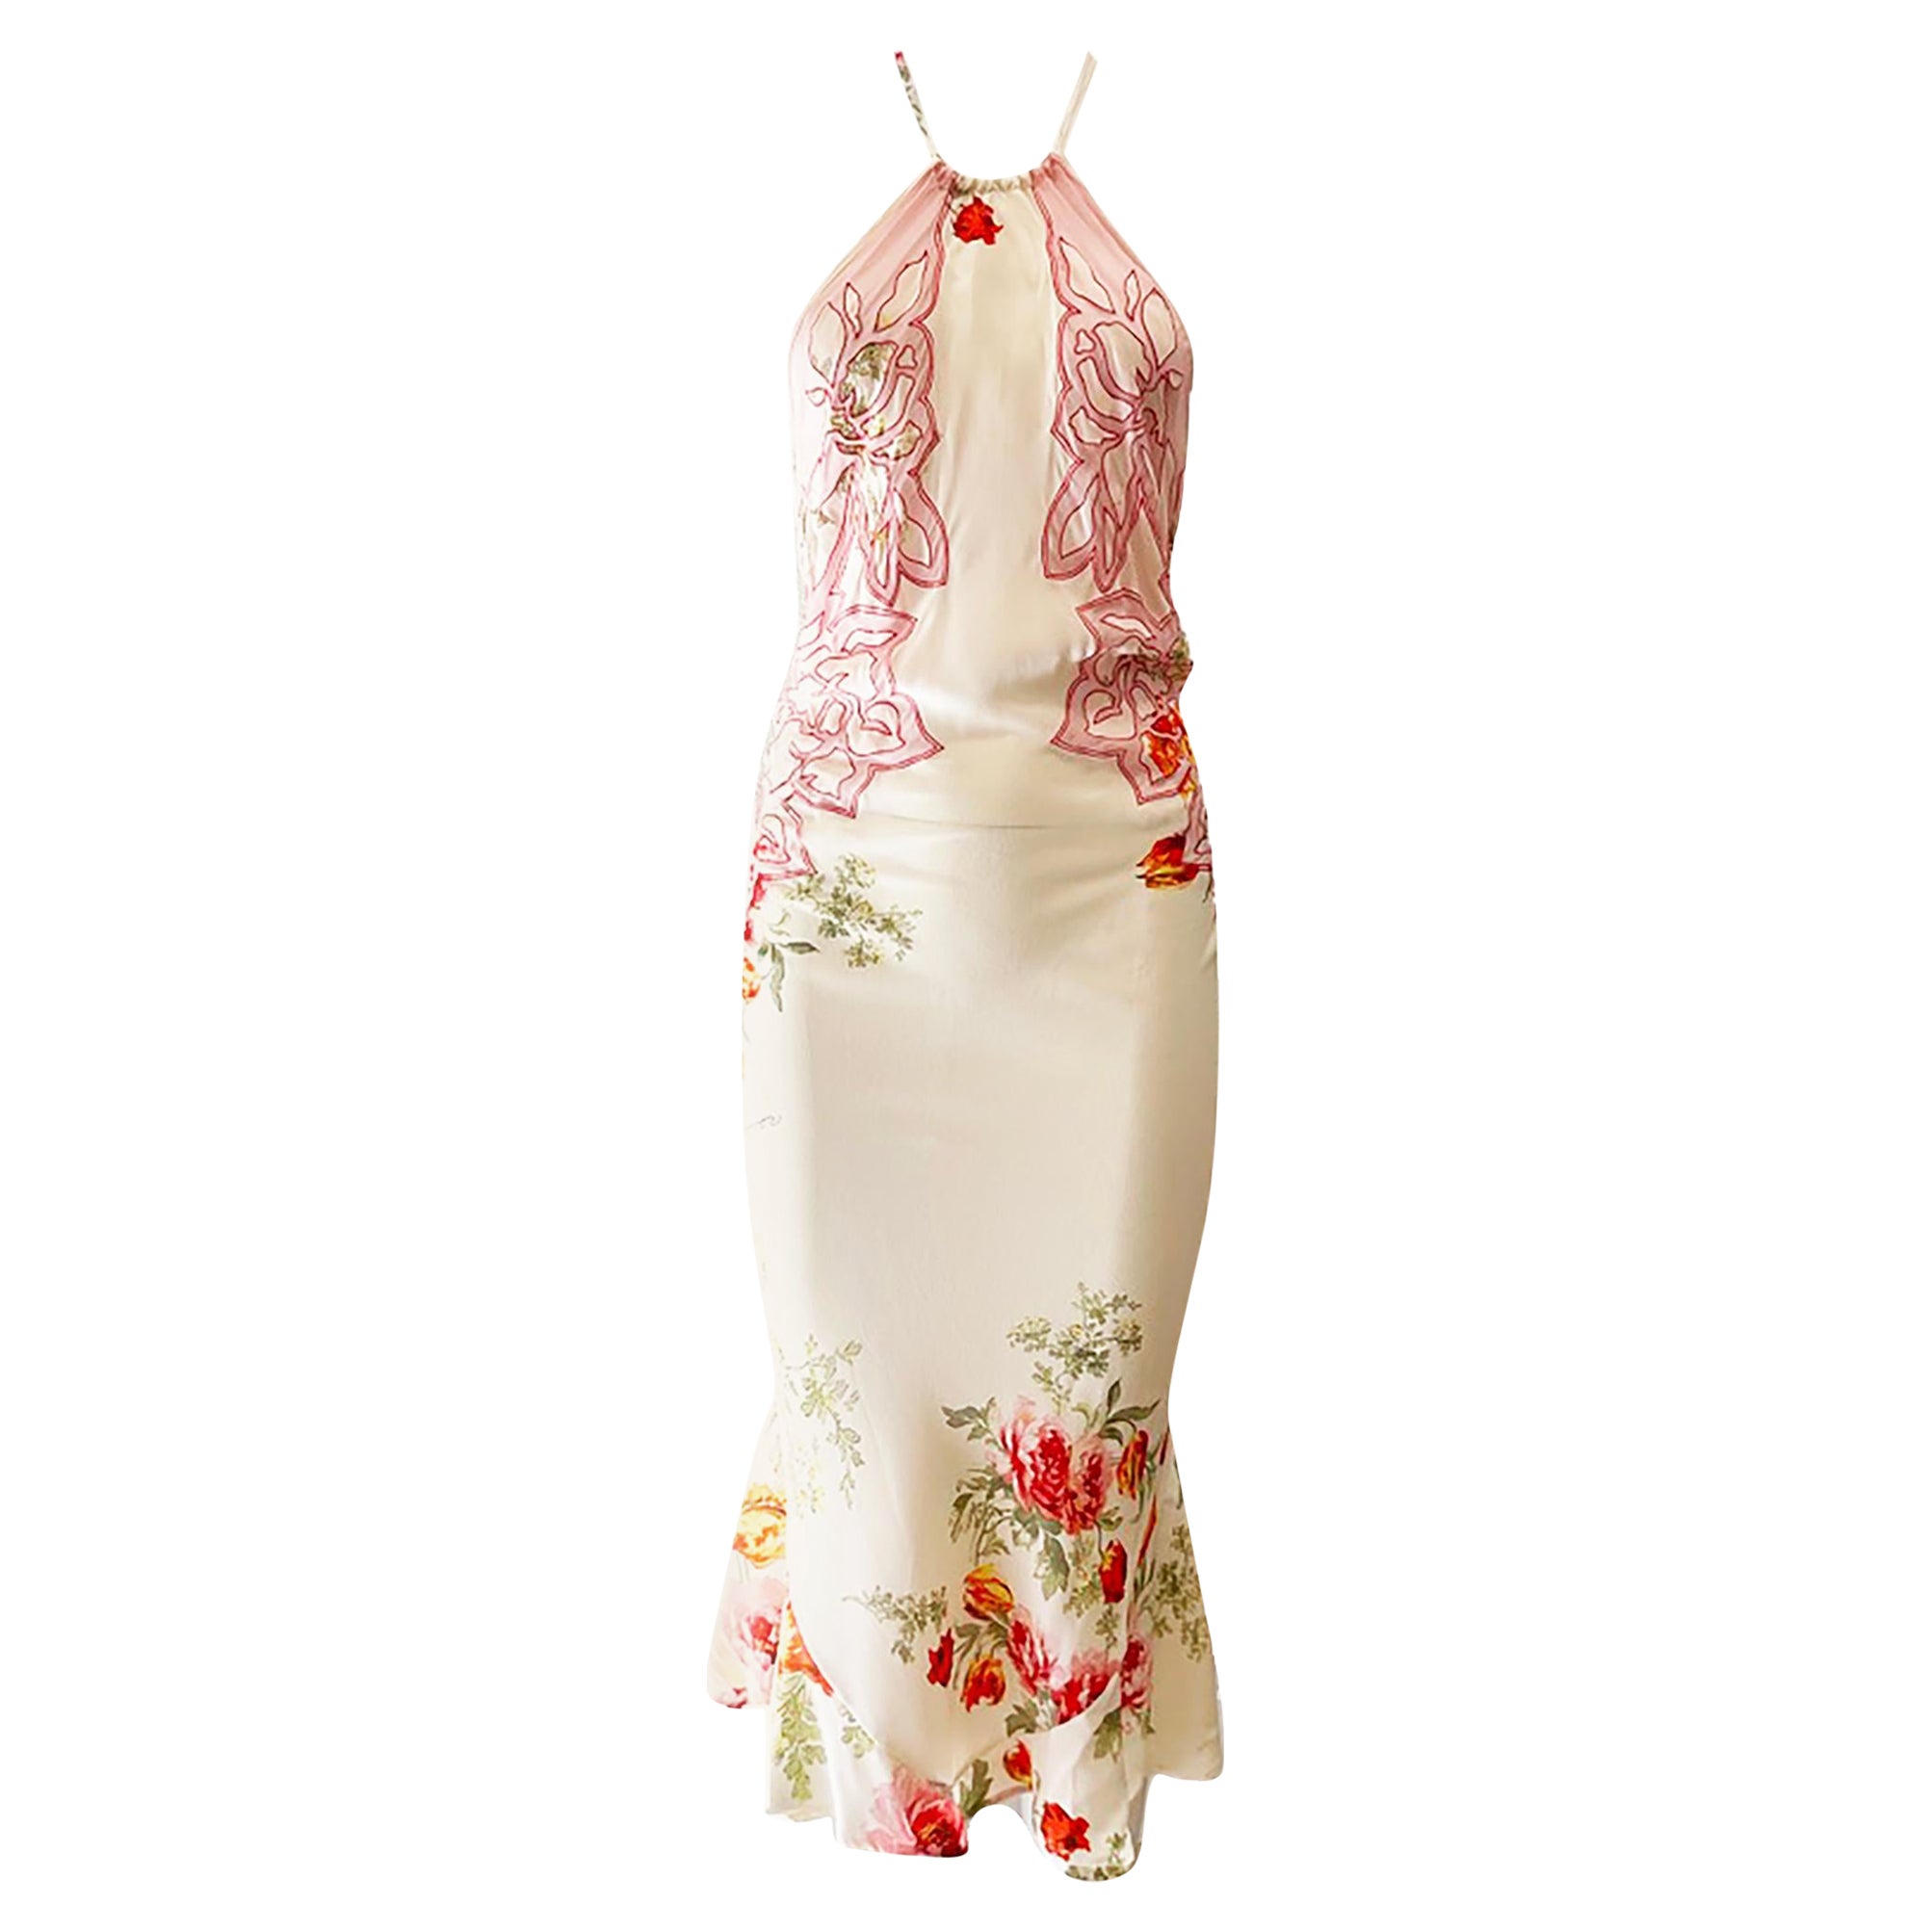 S/S 2002 Roberto Cavalli Sheer Floral Silk Backless Dress